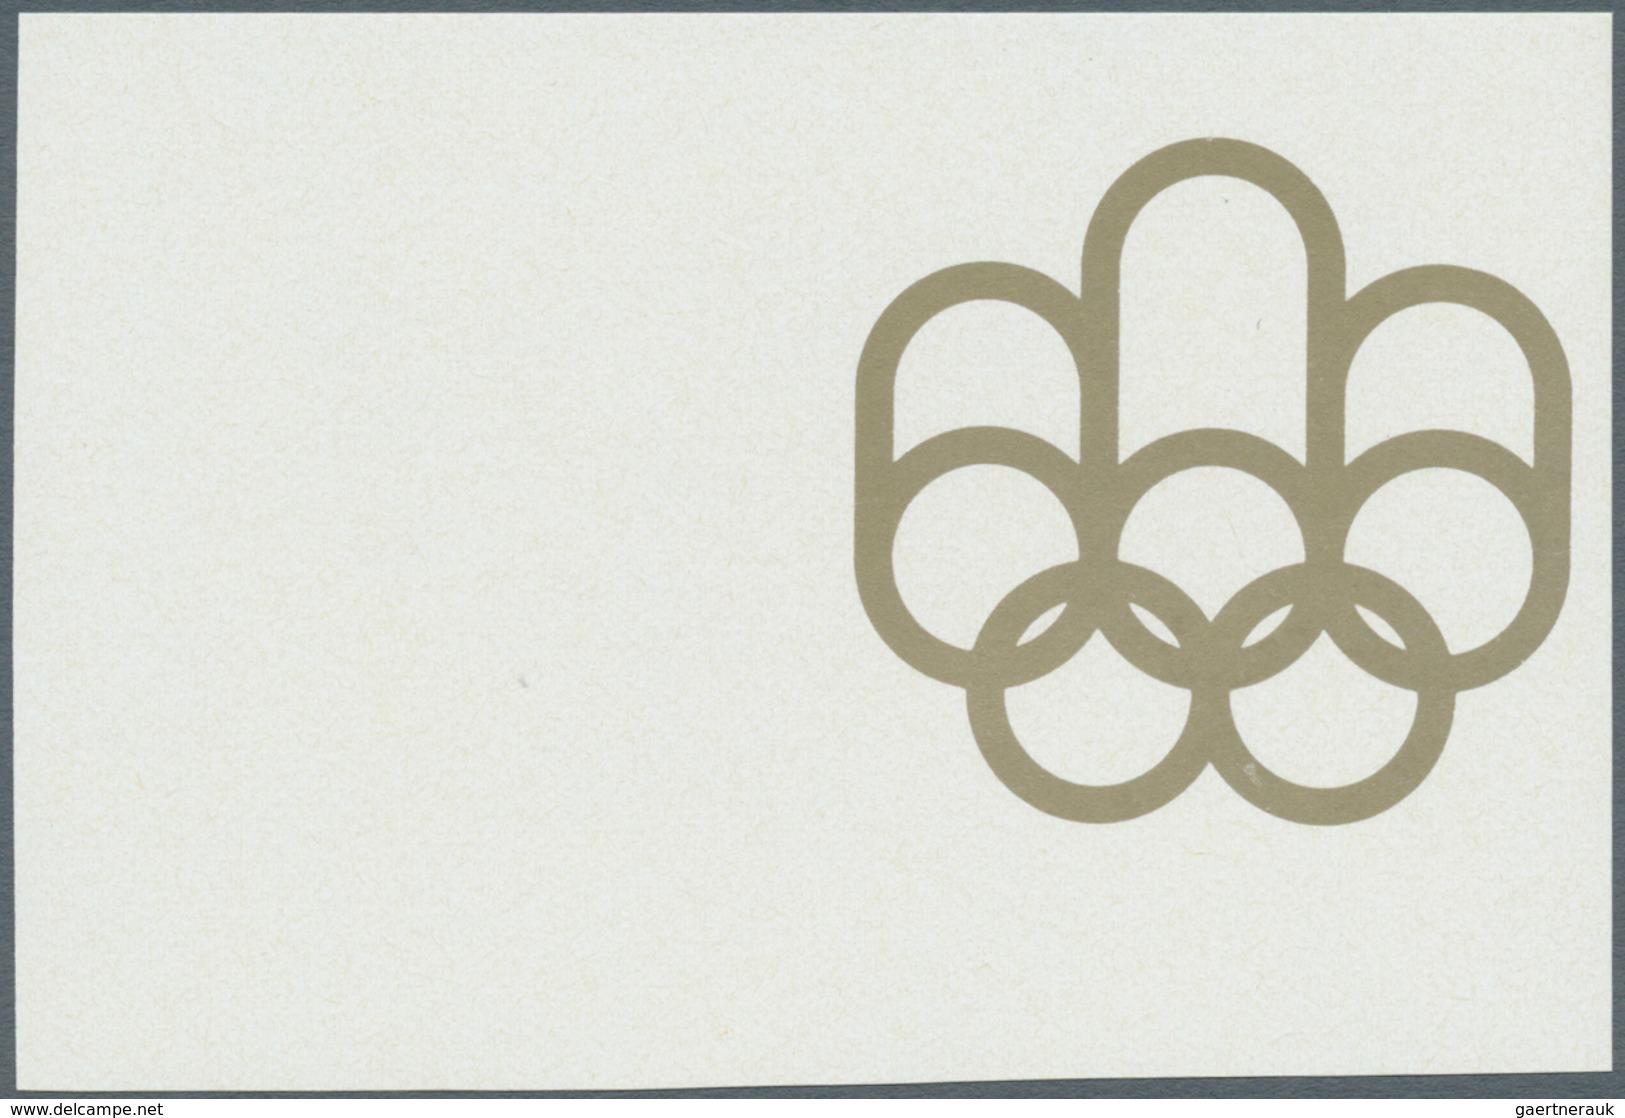 Äquatorialguinea: 1976, Olympische Sommerspiele In Montreal Als Blockausgabe In 6 Verschiedenen Druc - Äquatorial-Guinea